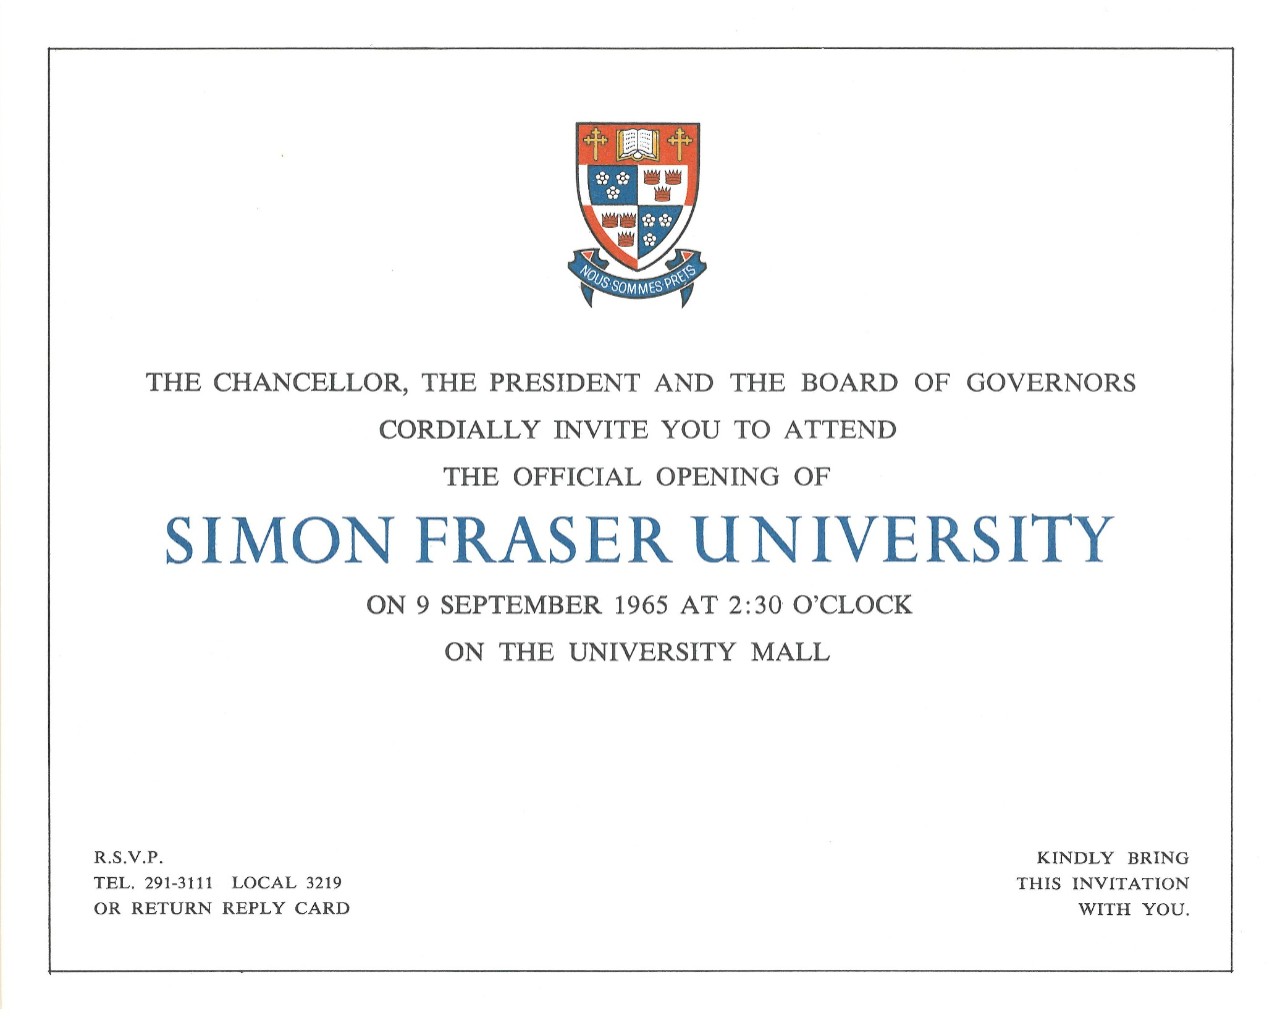 SFU official opening invitation, 9 September 1965